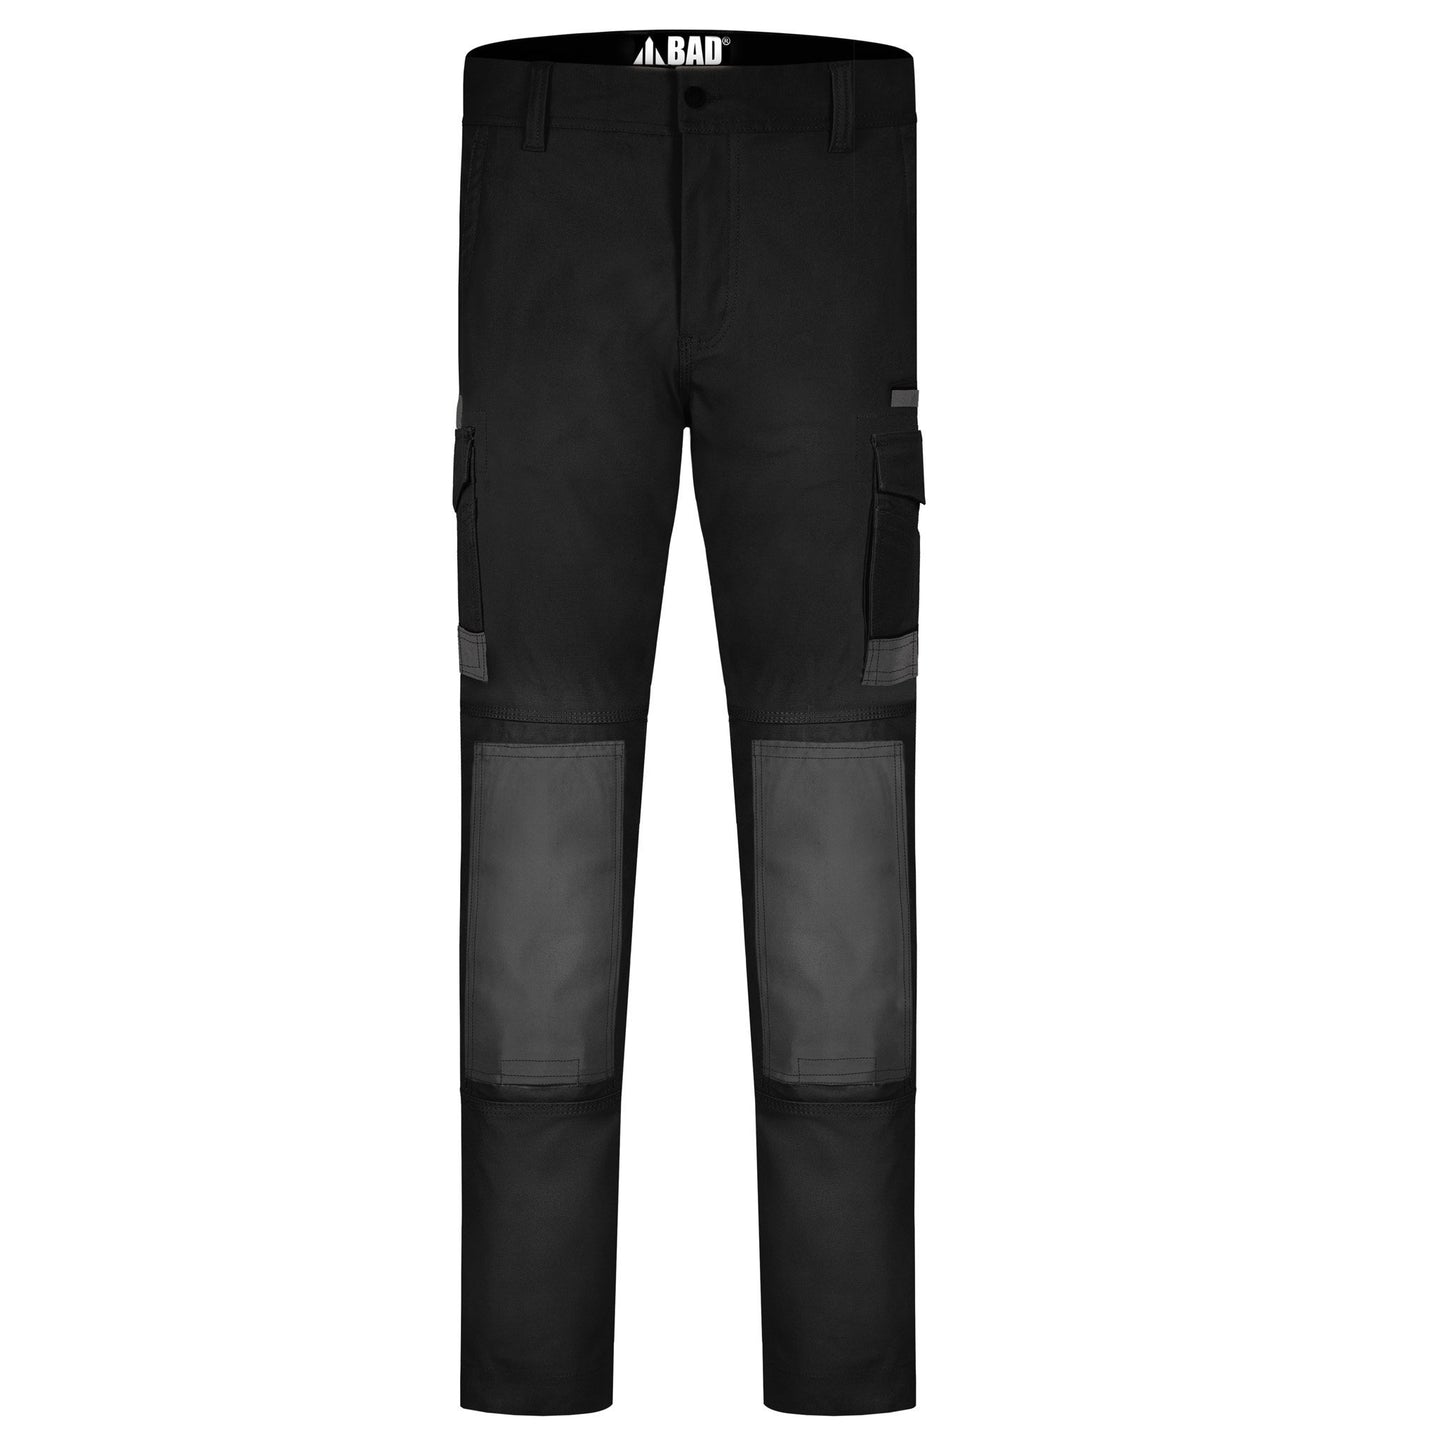 BAD® ATTITUDE™ Slim Fit Work Pants